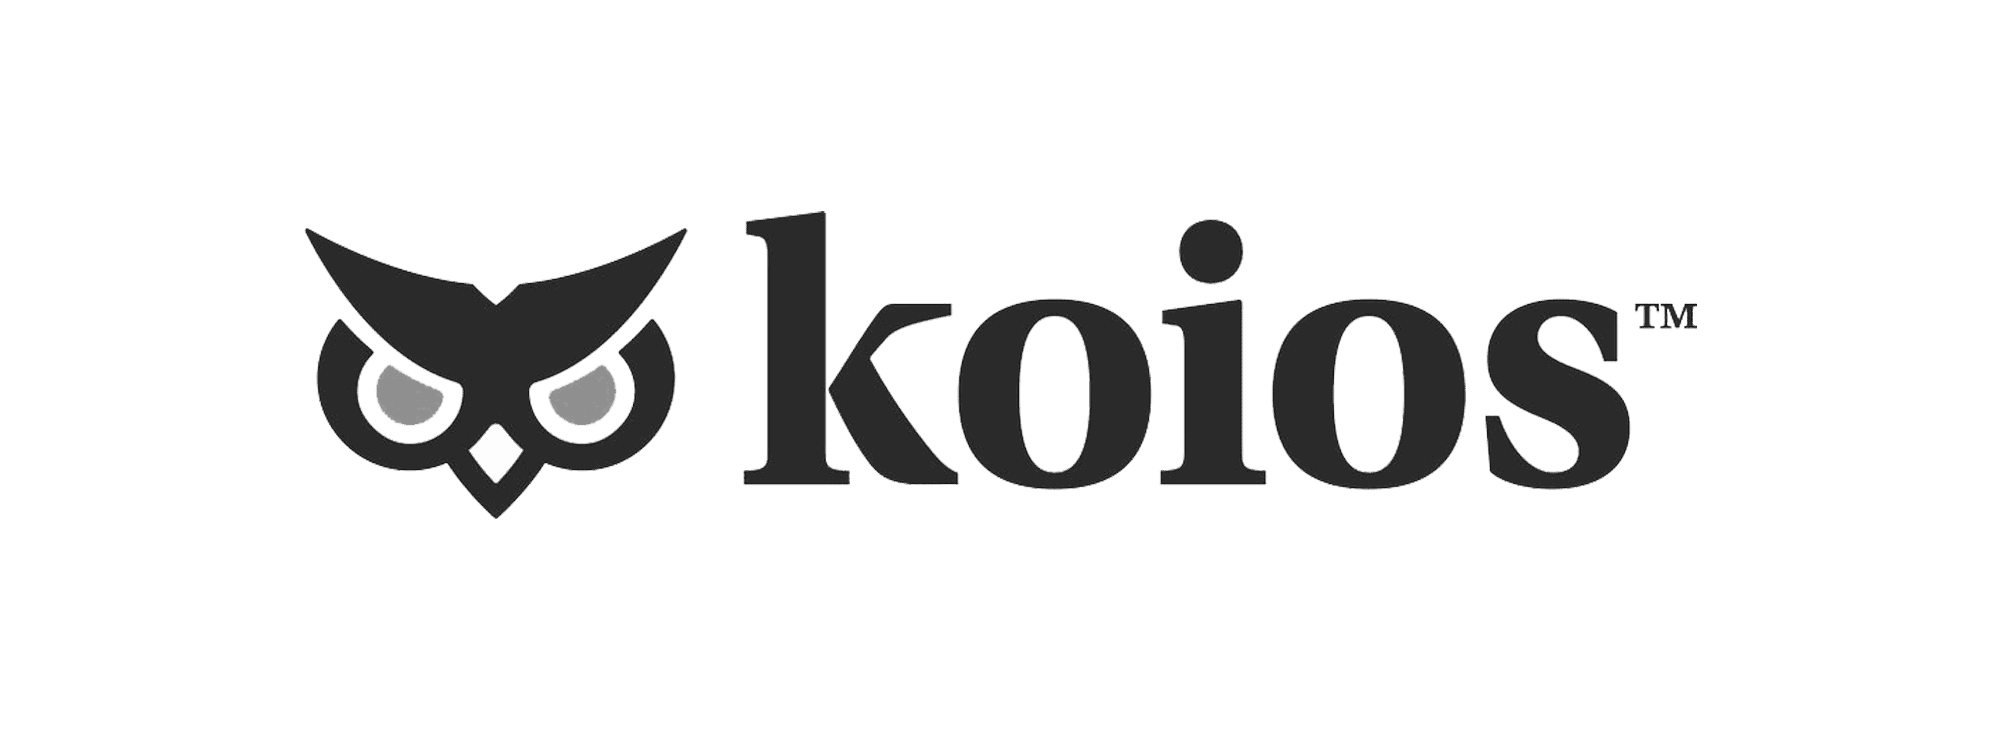 The logo for koios on a gray background, showcasing Gosmartware.